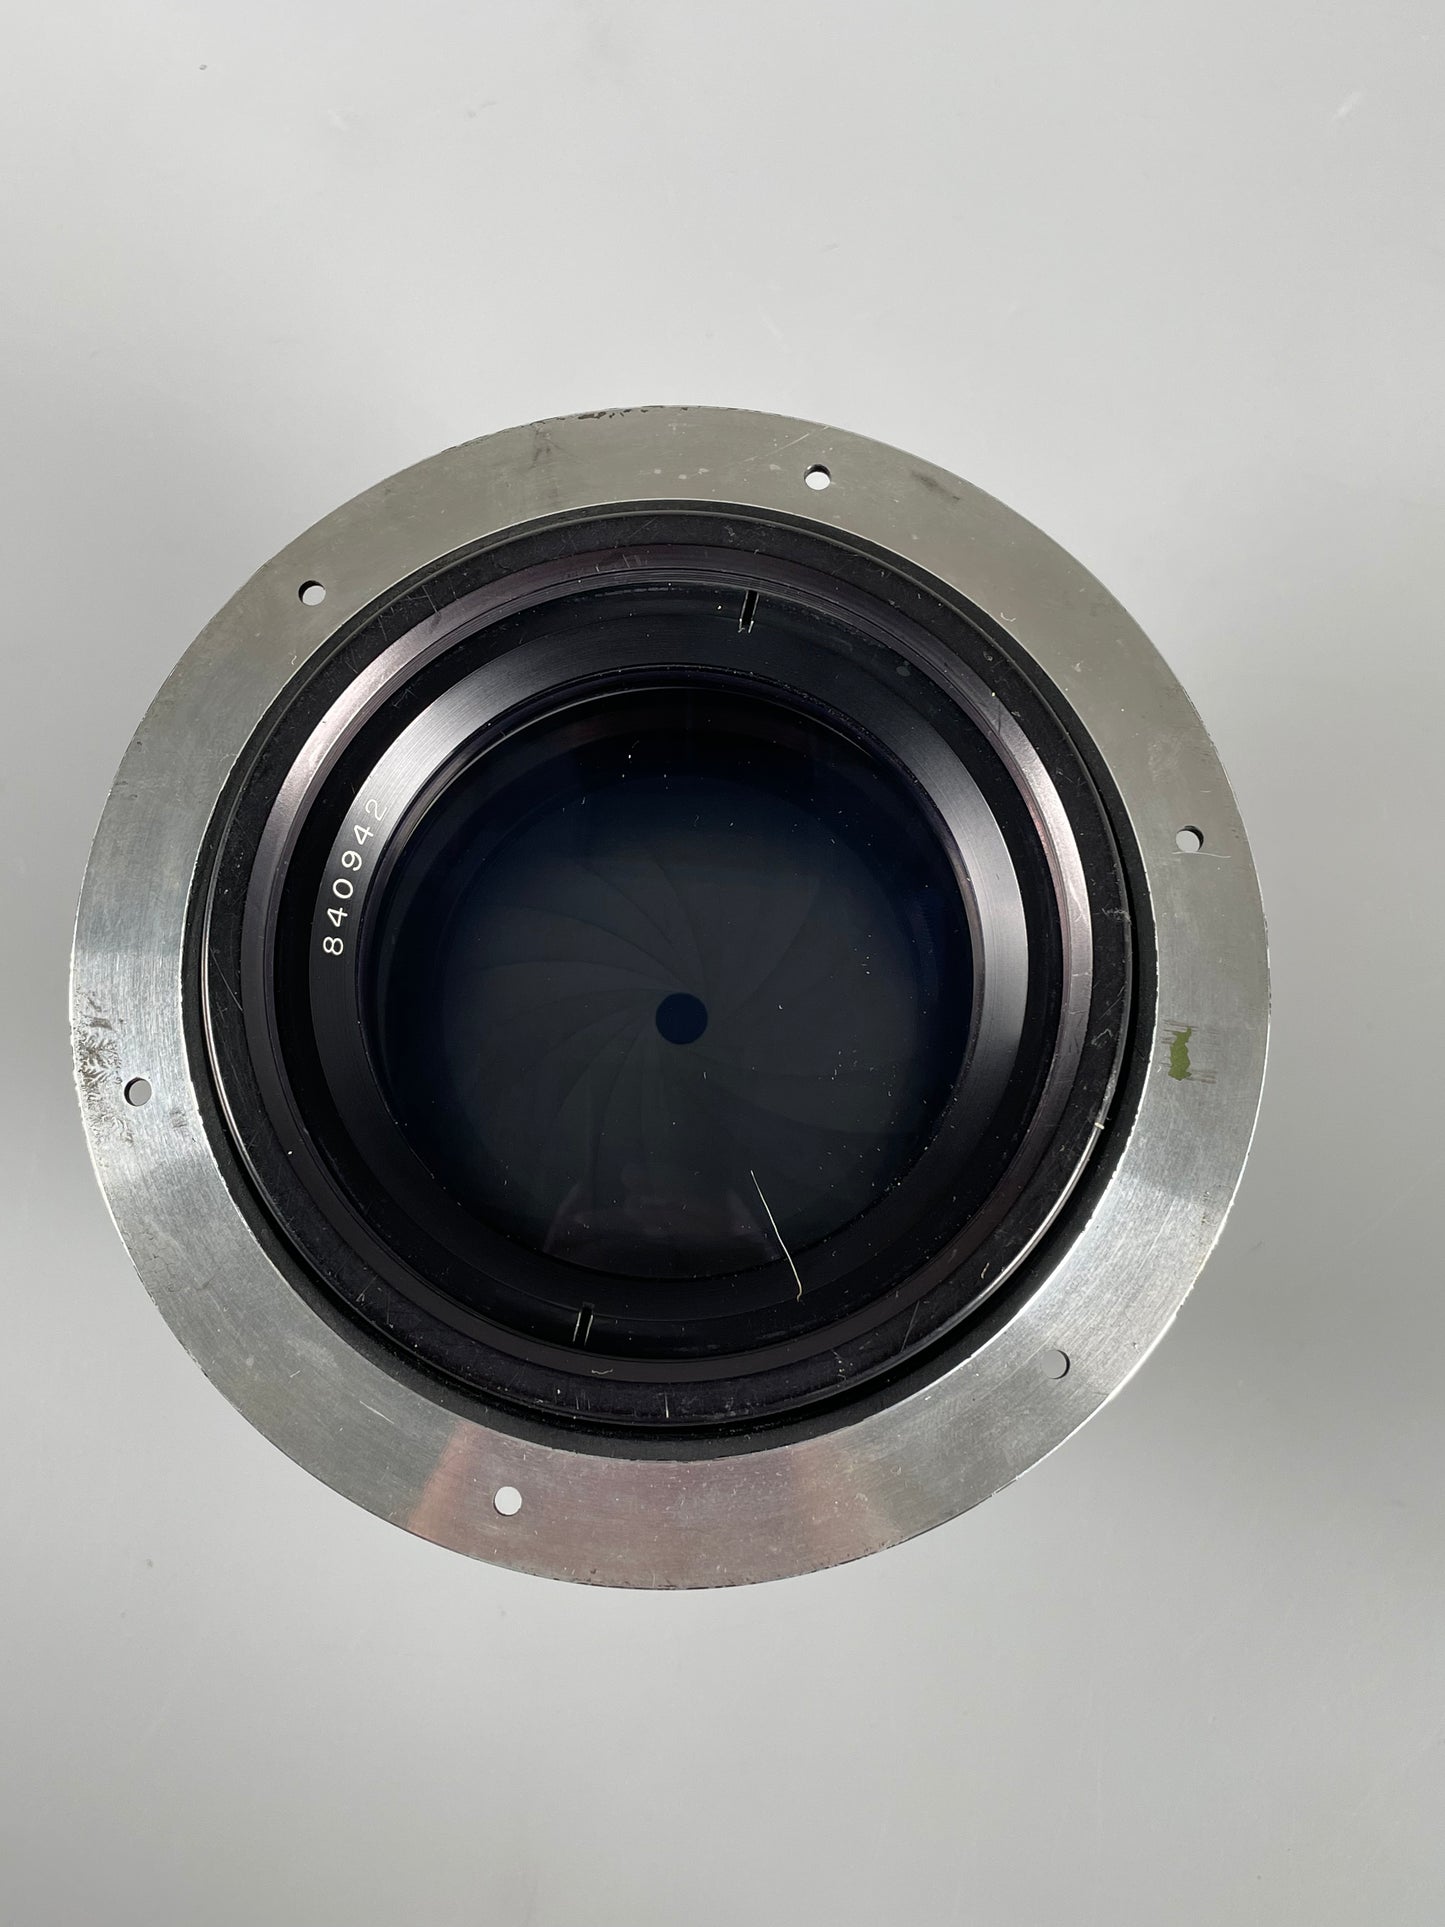 Goerz 35in f12.5 Apochromat Artar Barrel Lens red dot